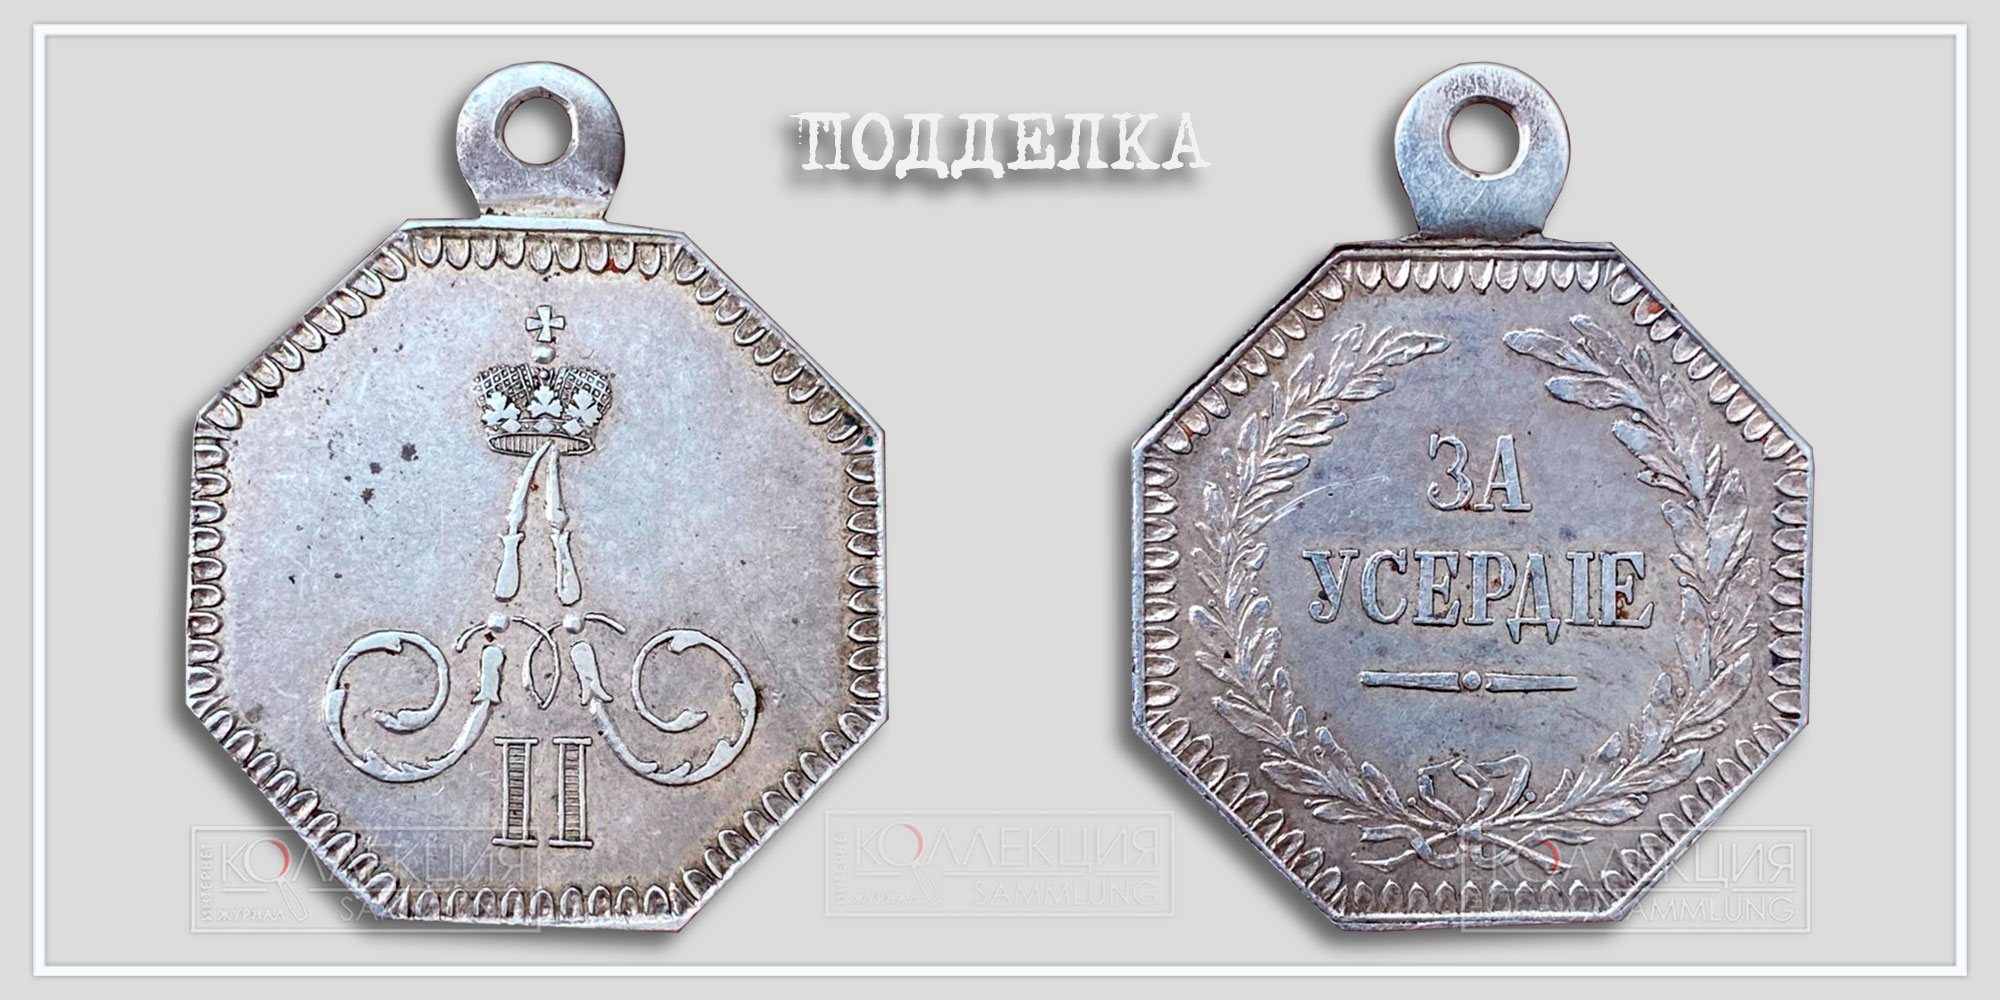 Медаль "За уcердие" Александр II восьмигранная(подделка) Из архива Фалеристика.инфо. Разметил коллега сармат